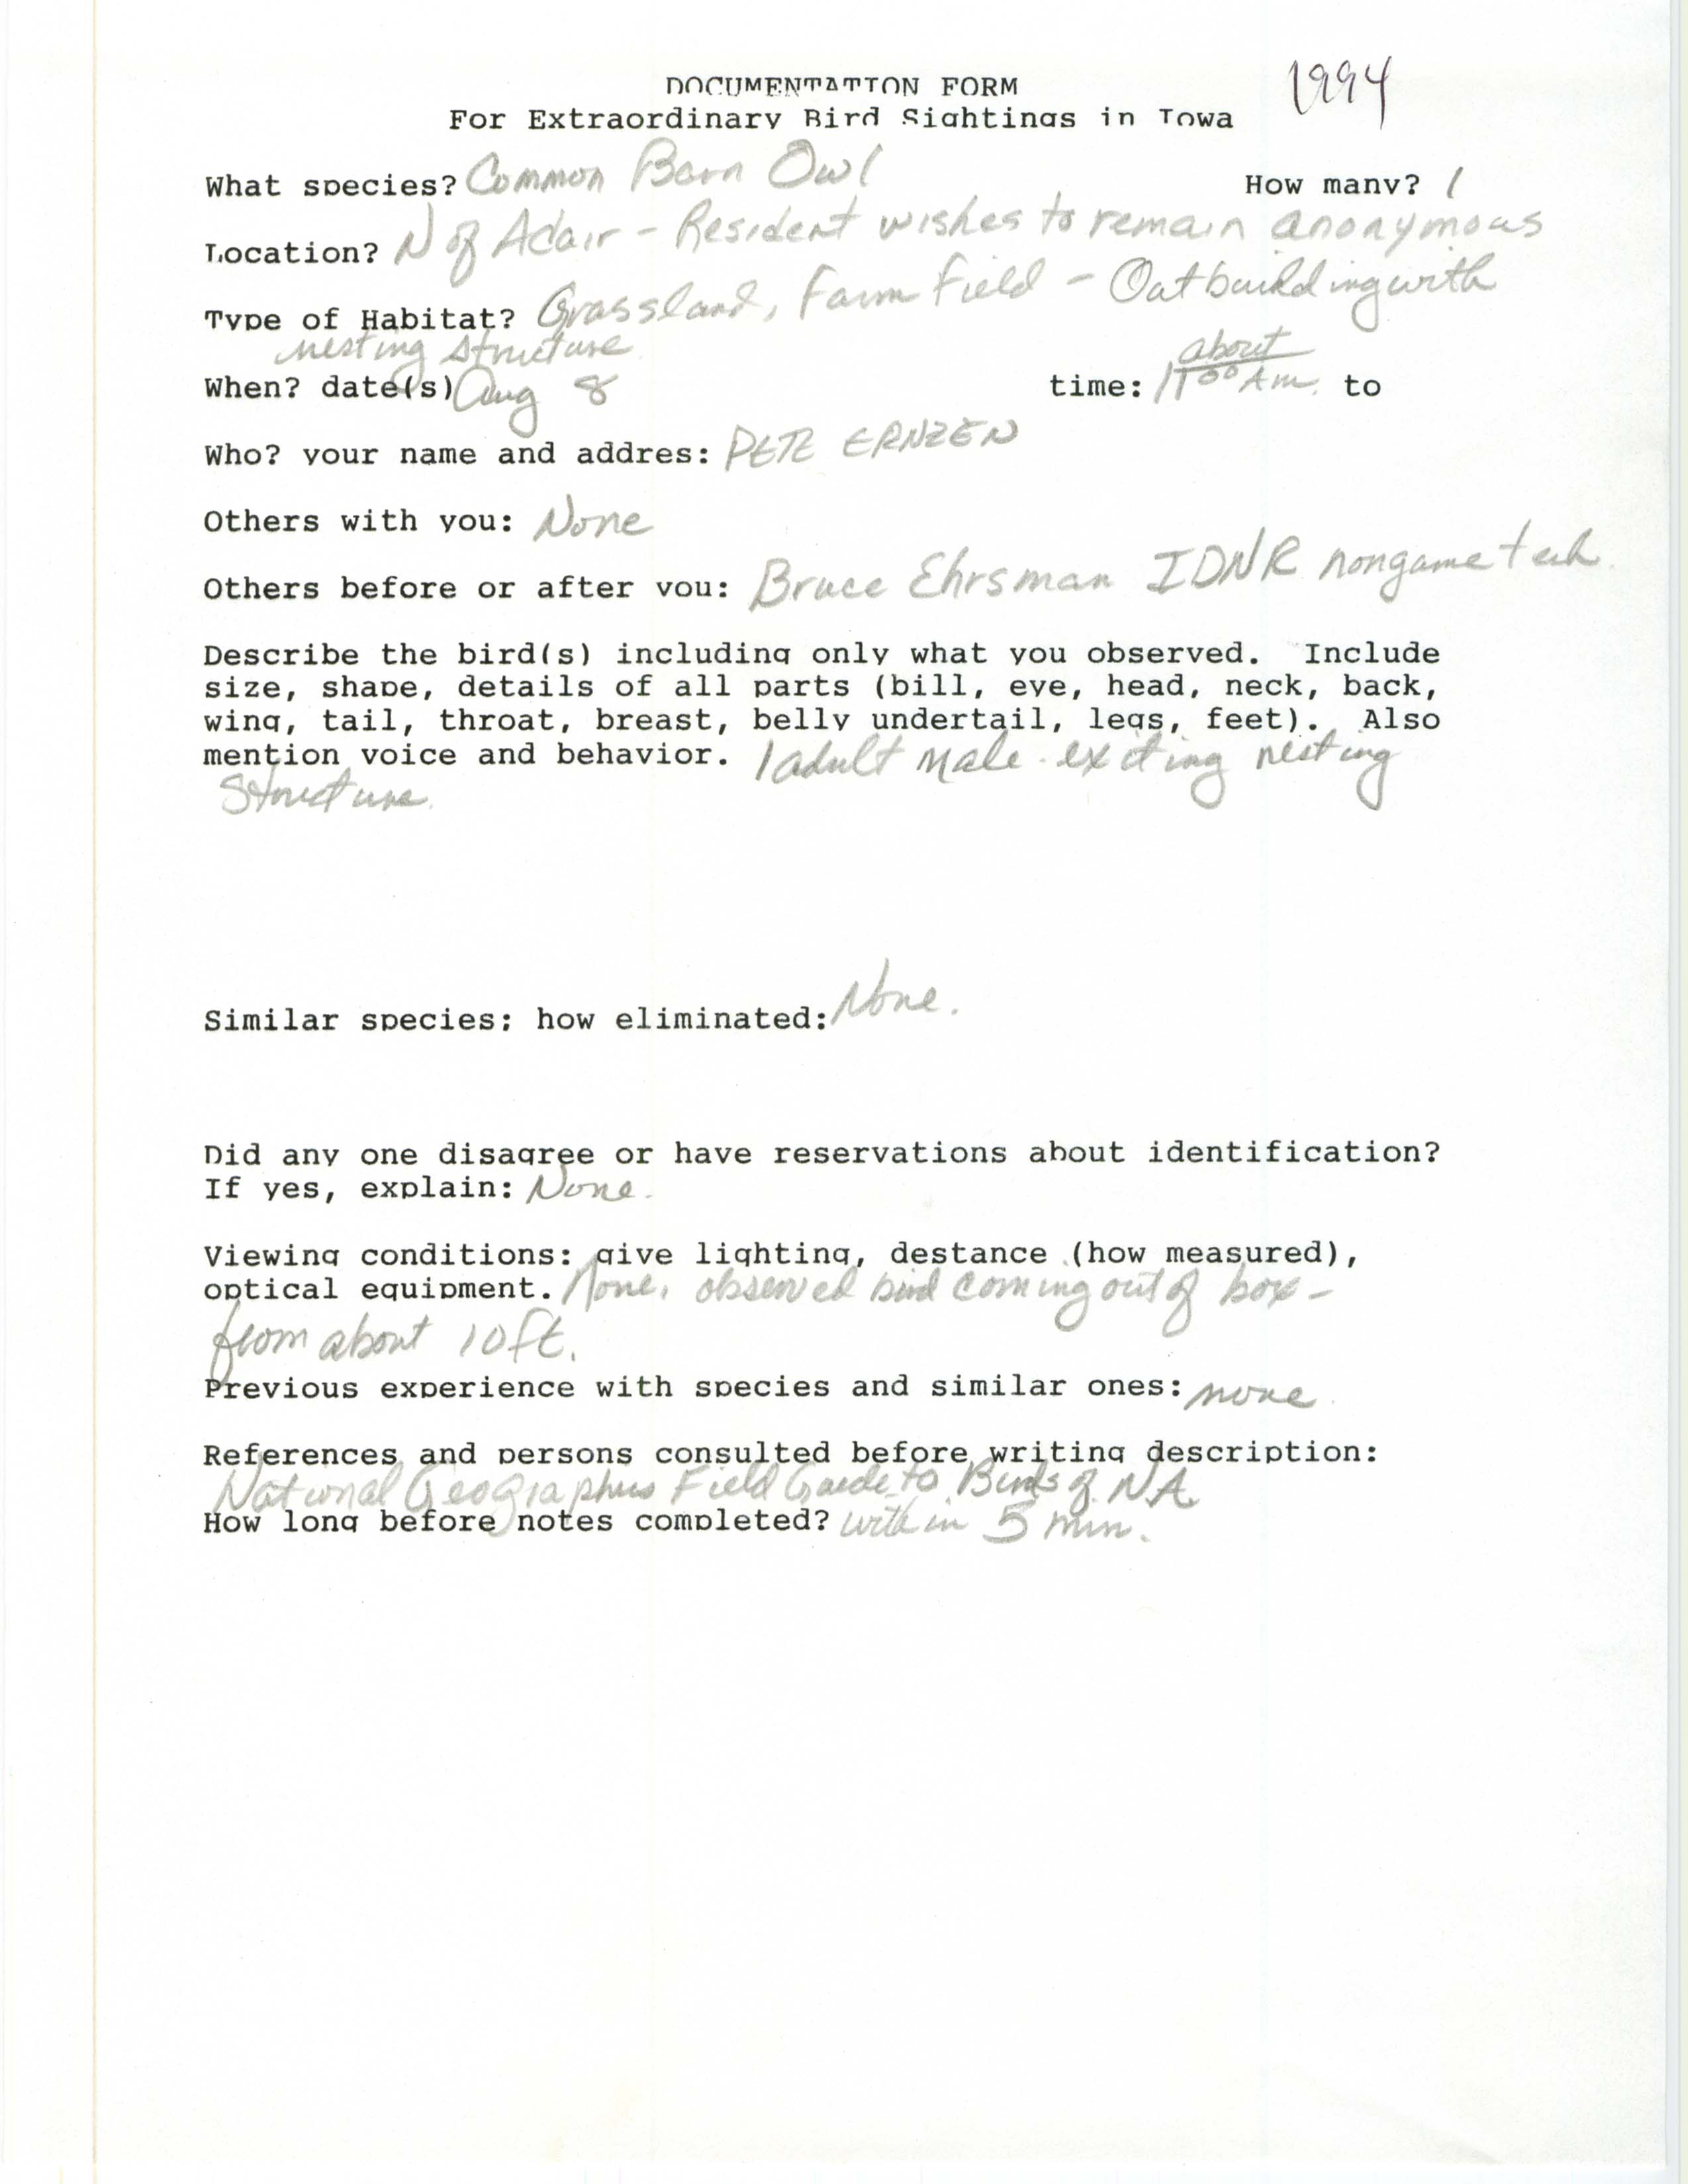 Rare bird documentation form for Barn Owl north of Adair in 1994